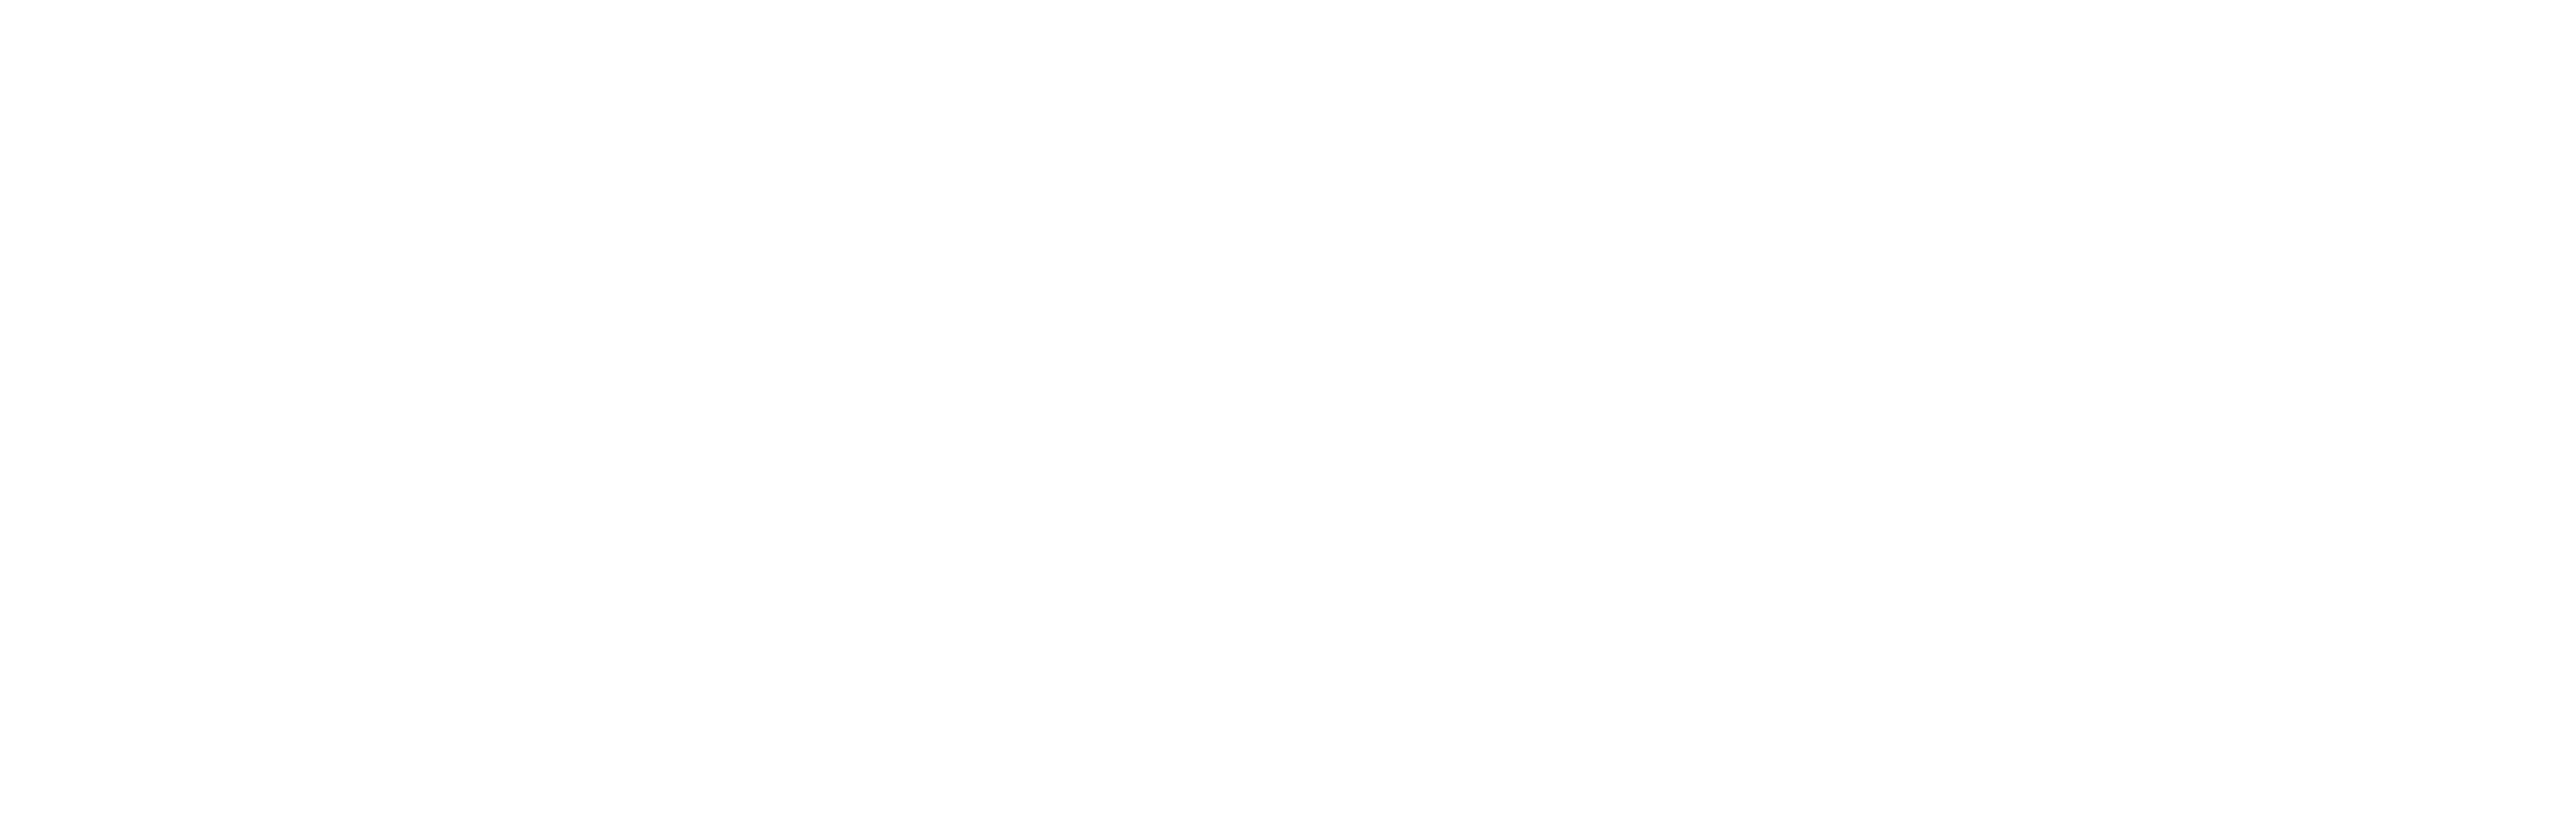 Roger Williams University logo